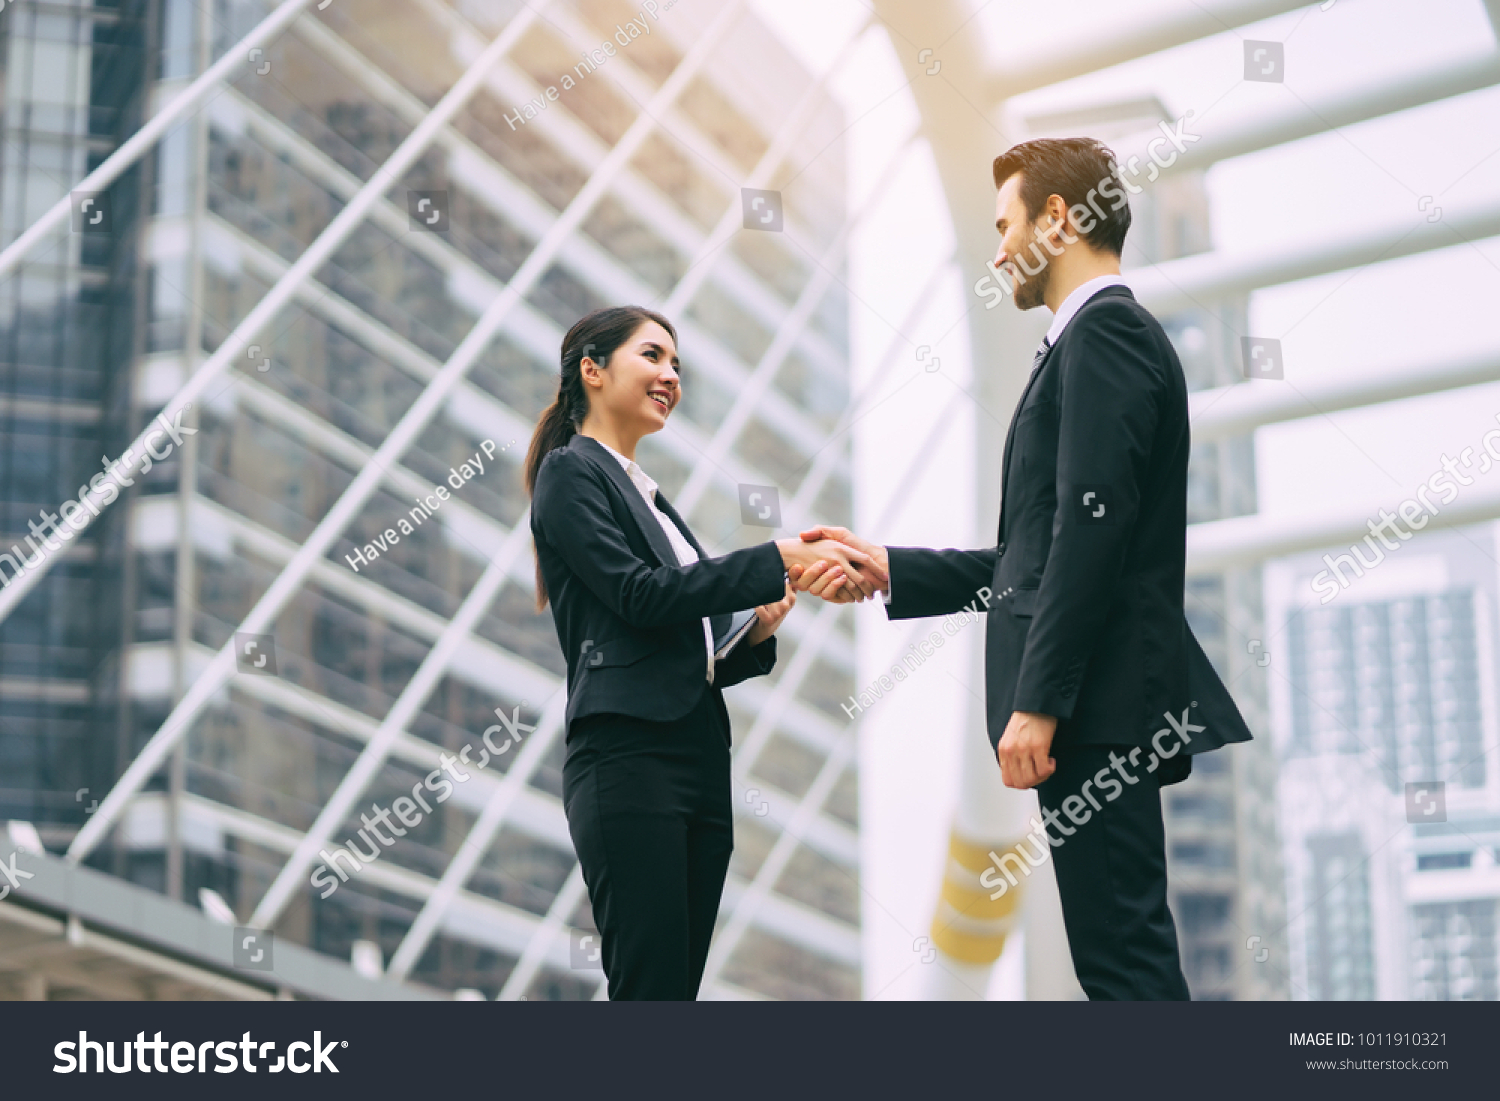 Business partnership marketing meeting concept. Image businessmans handshake. Successful businessmen handshaking after good deal.vintage color, Discussing Together Startup Idea.Working Online Project #1011910321